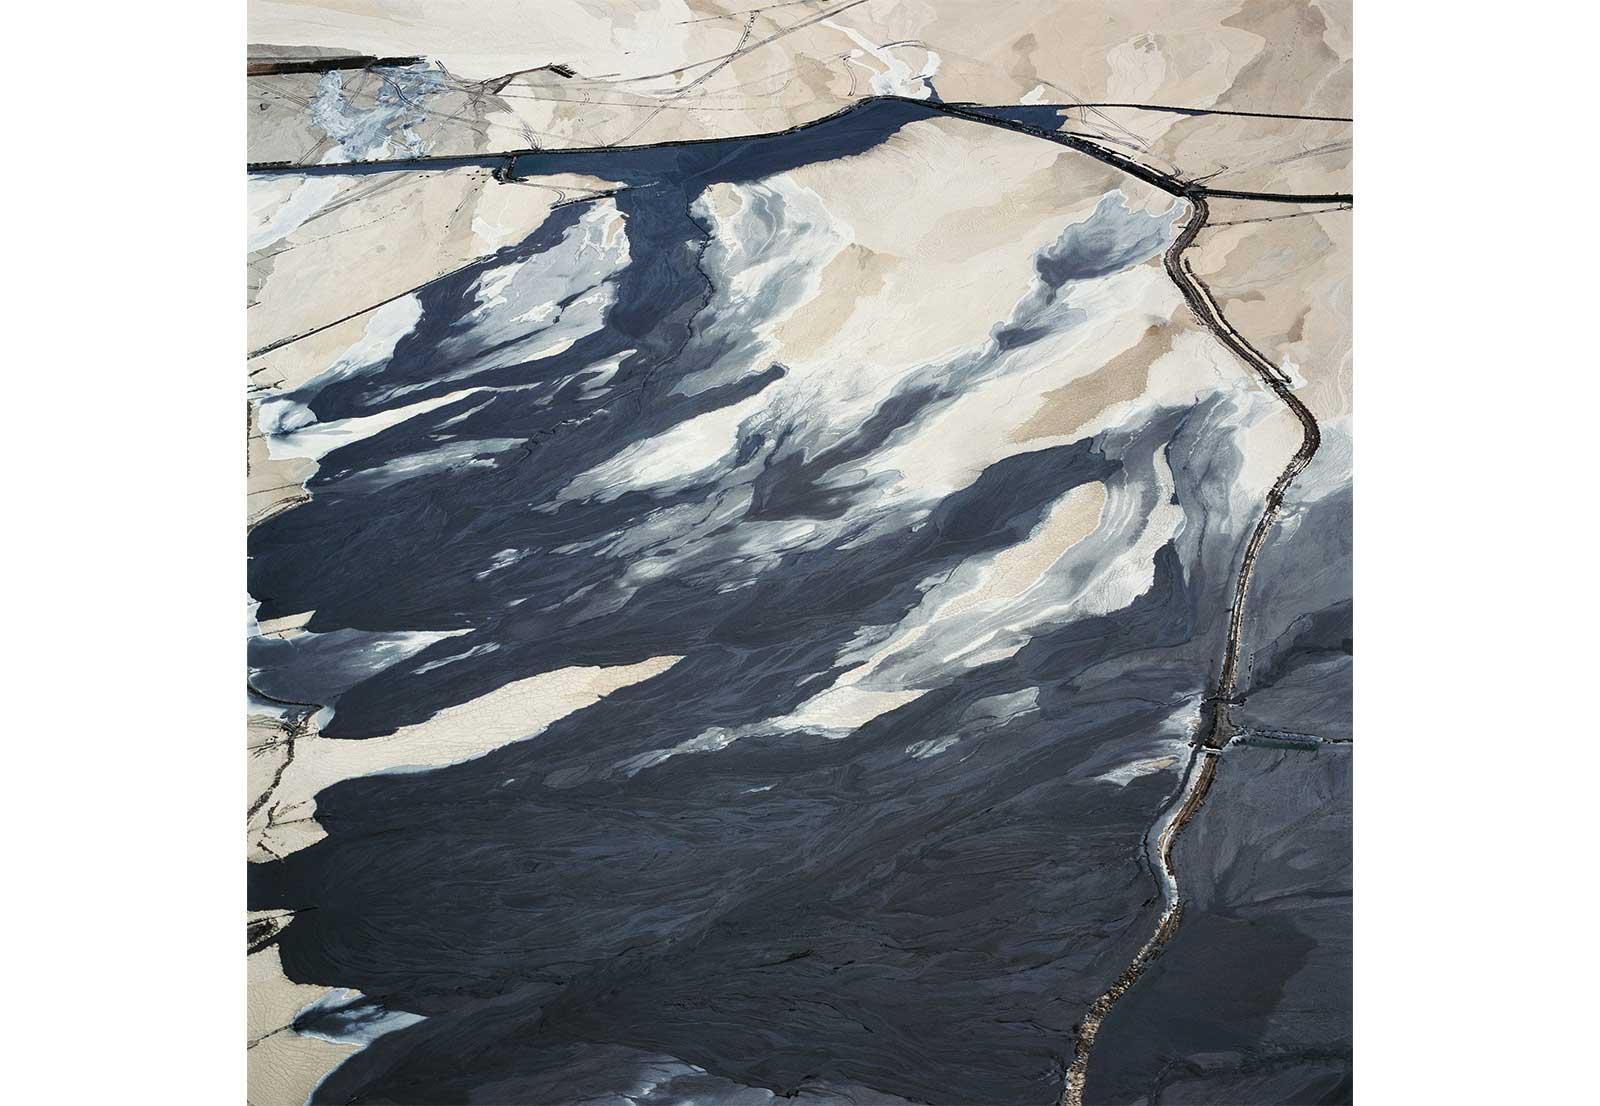 David Maisel, Tailings Pond 2, Minera Centinela, Copper Mine, Antofagasta Region, Atacama Desert, Chile, 2018.